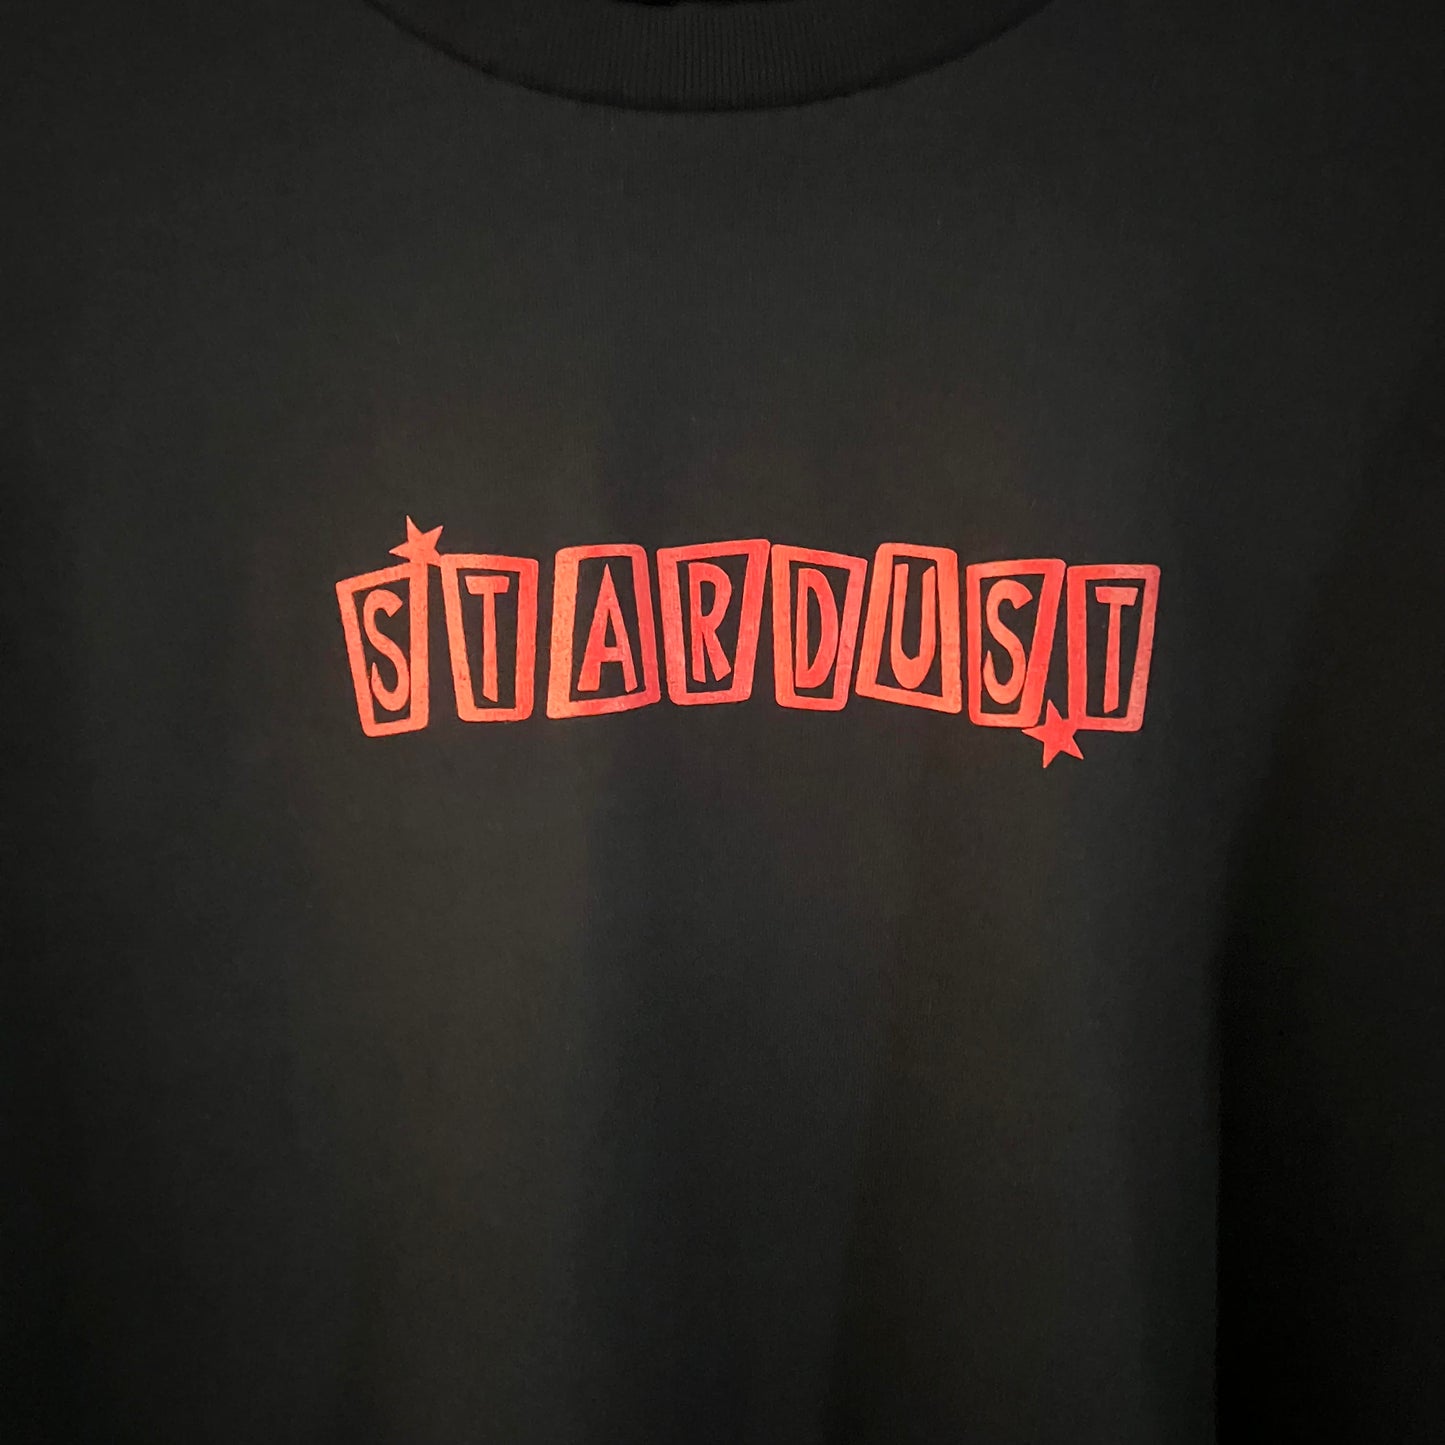 Stardust Skate Shop Tee 028 Black / Bright Red